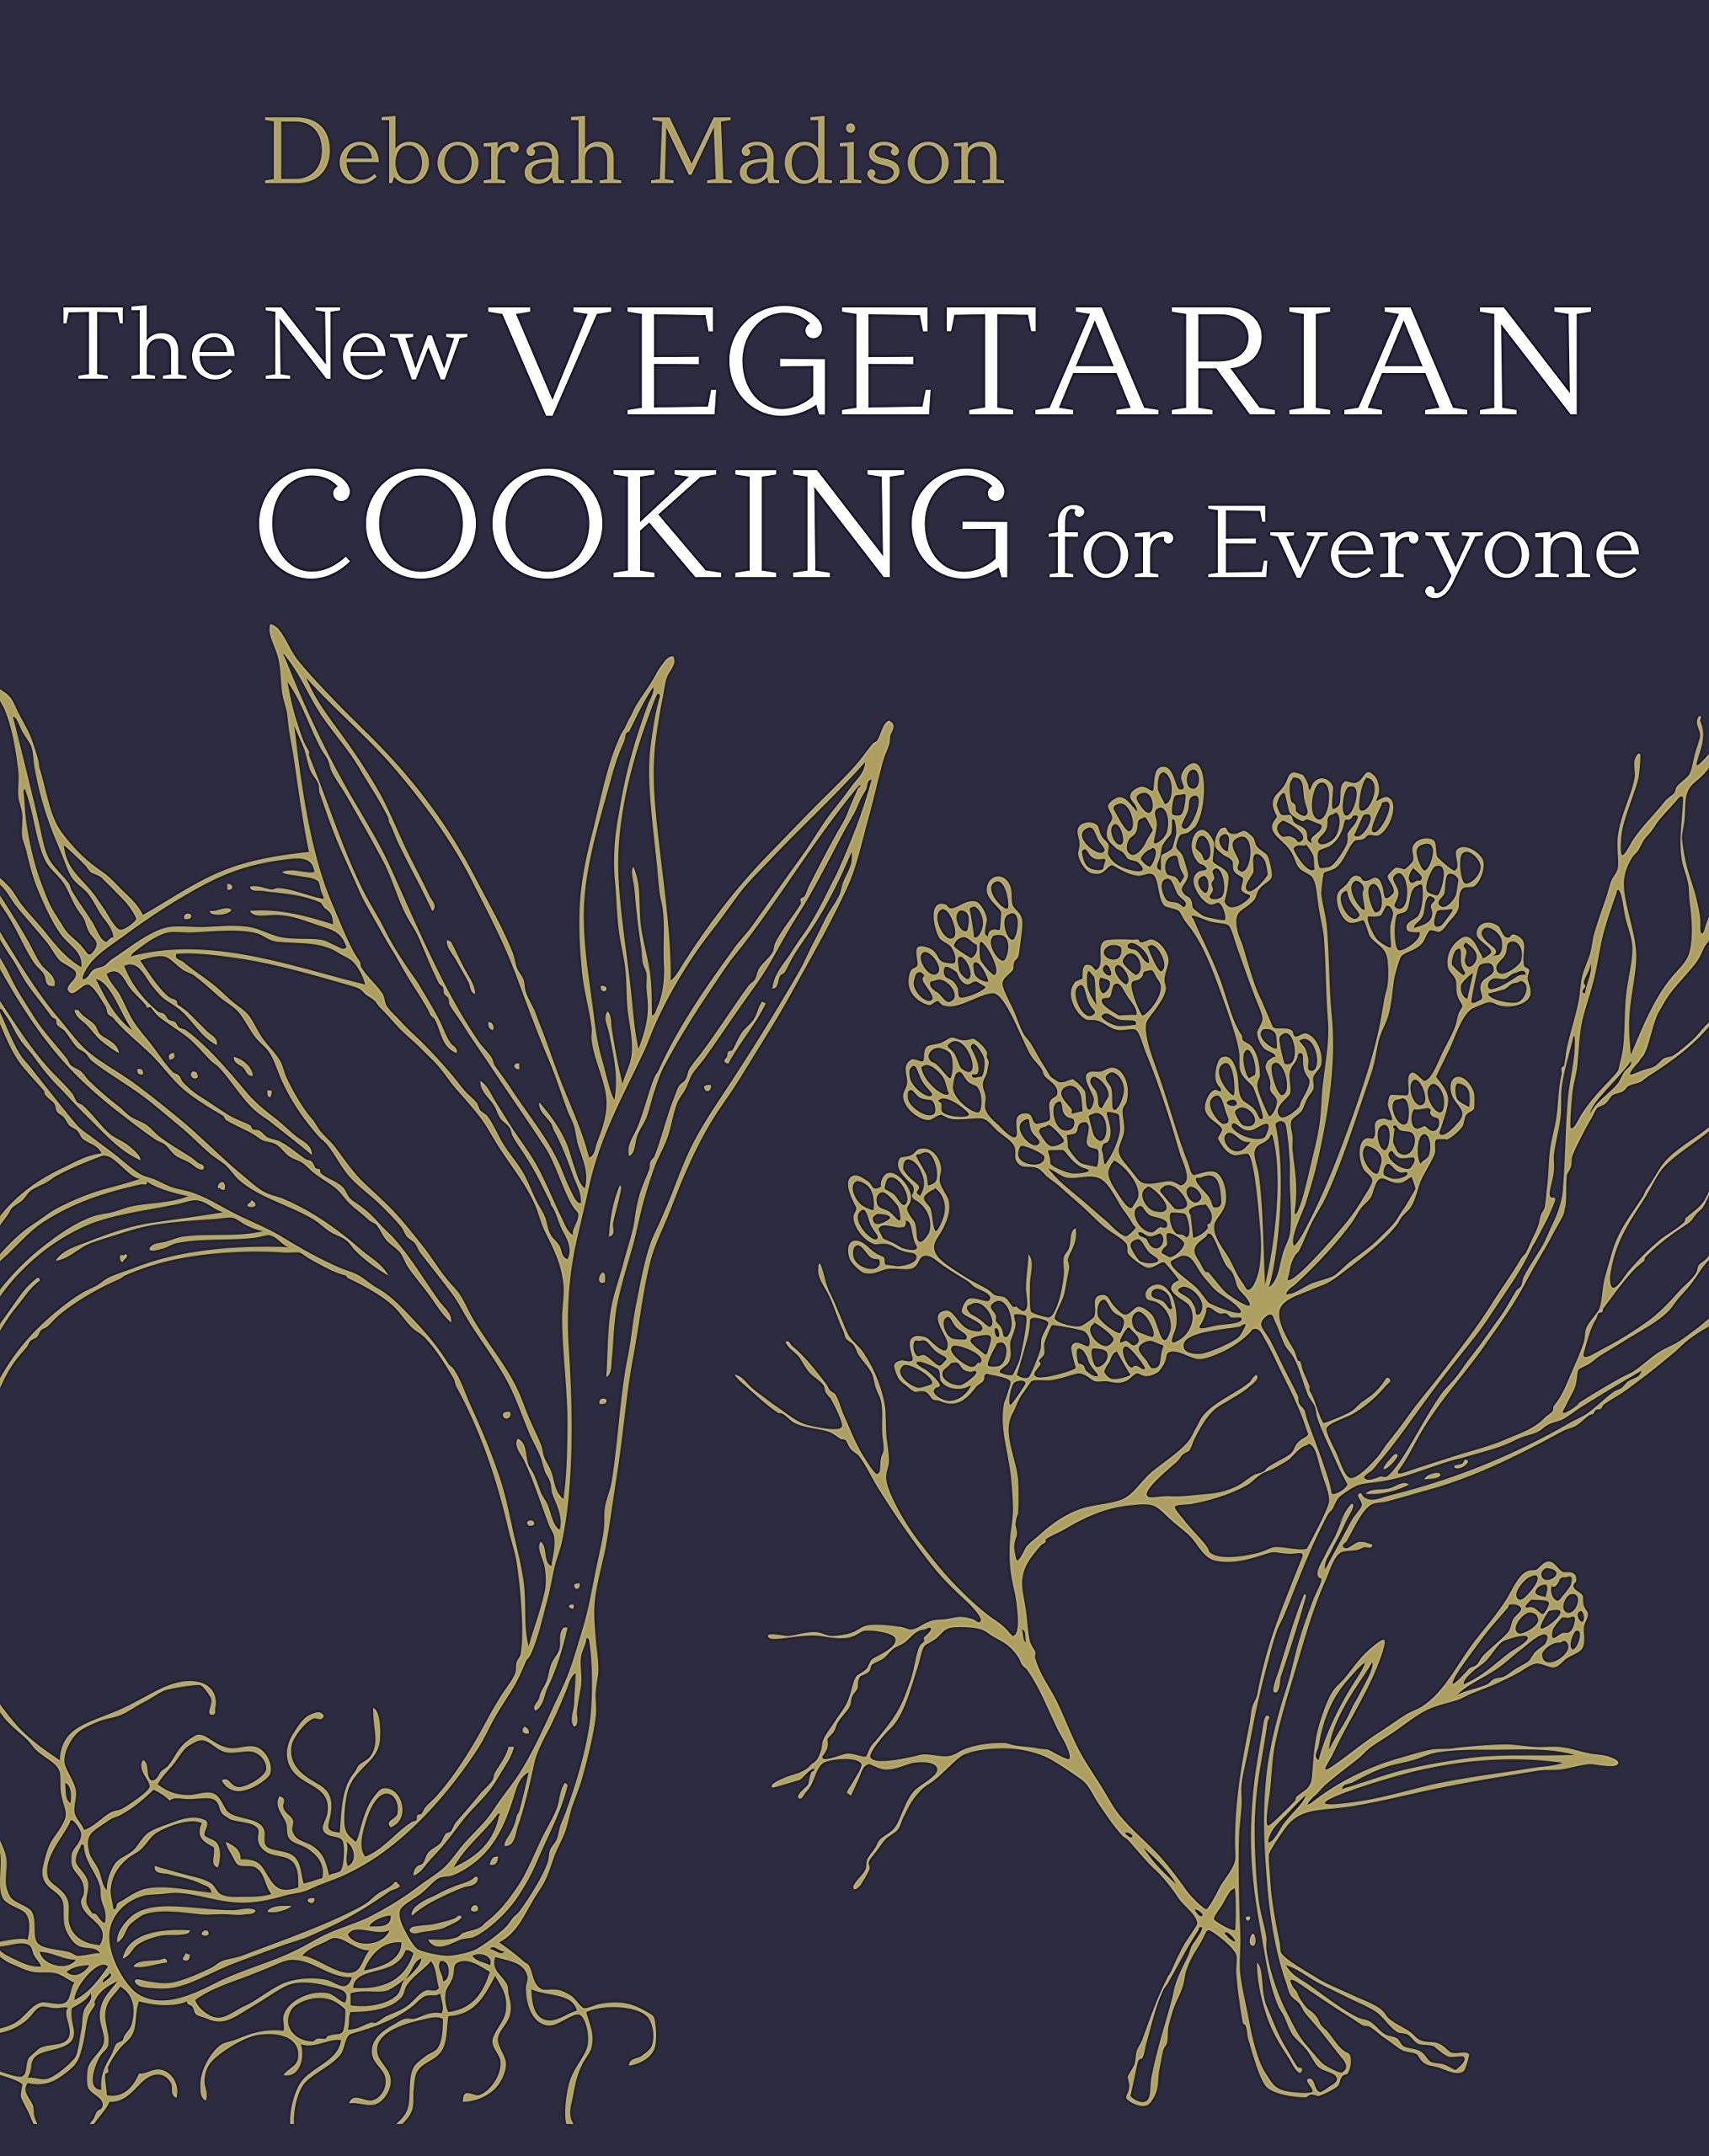 The New Vegetarian Cooking for Everyone (Deborah Madison)